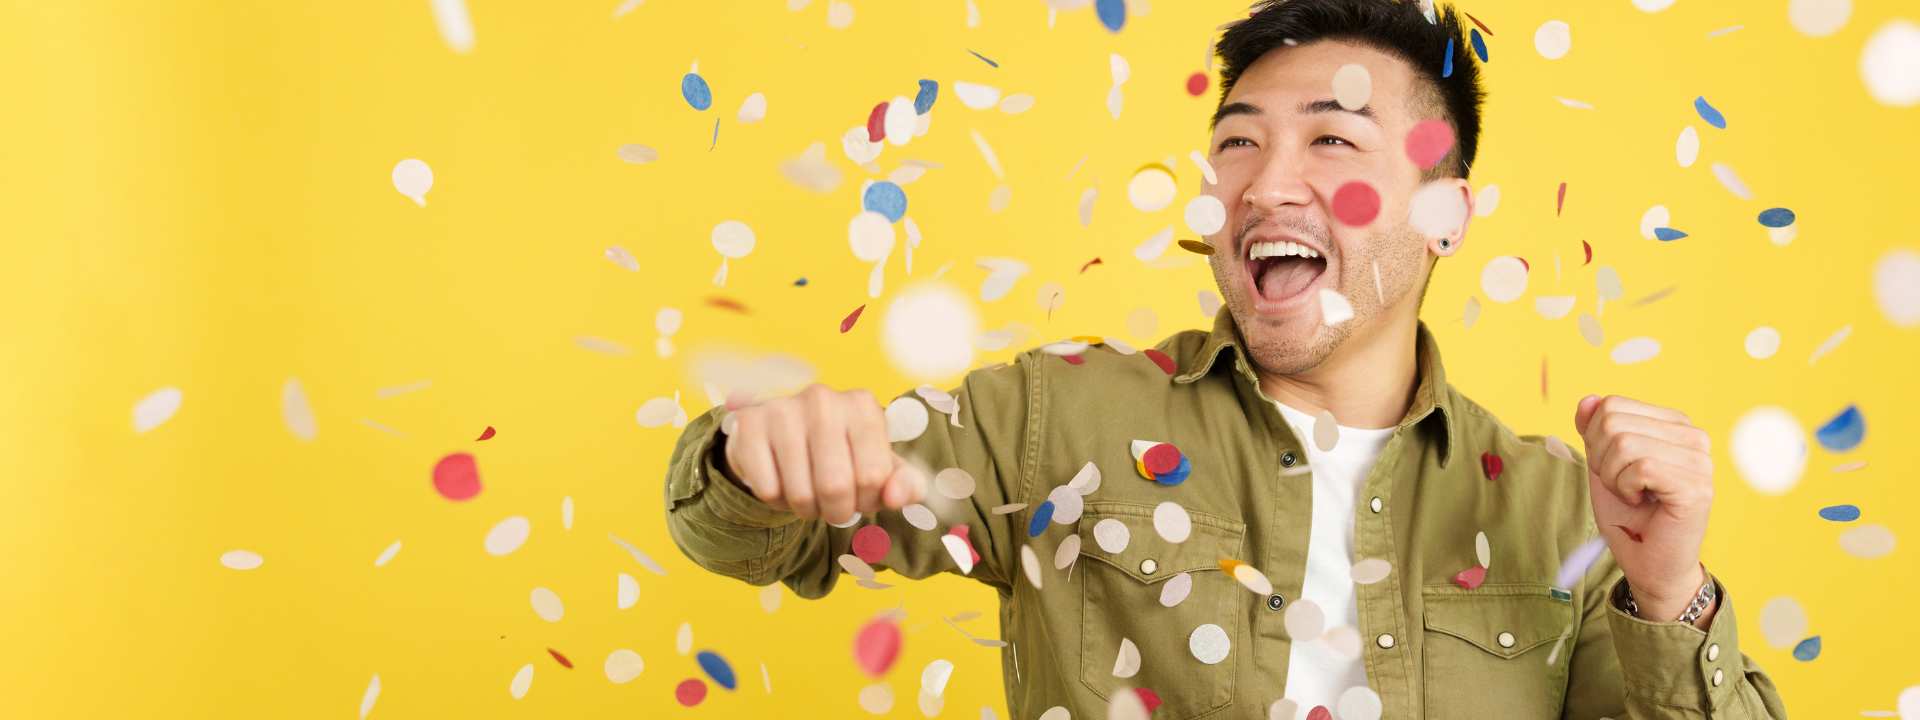 A man celebrates as confetti falls